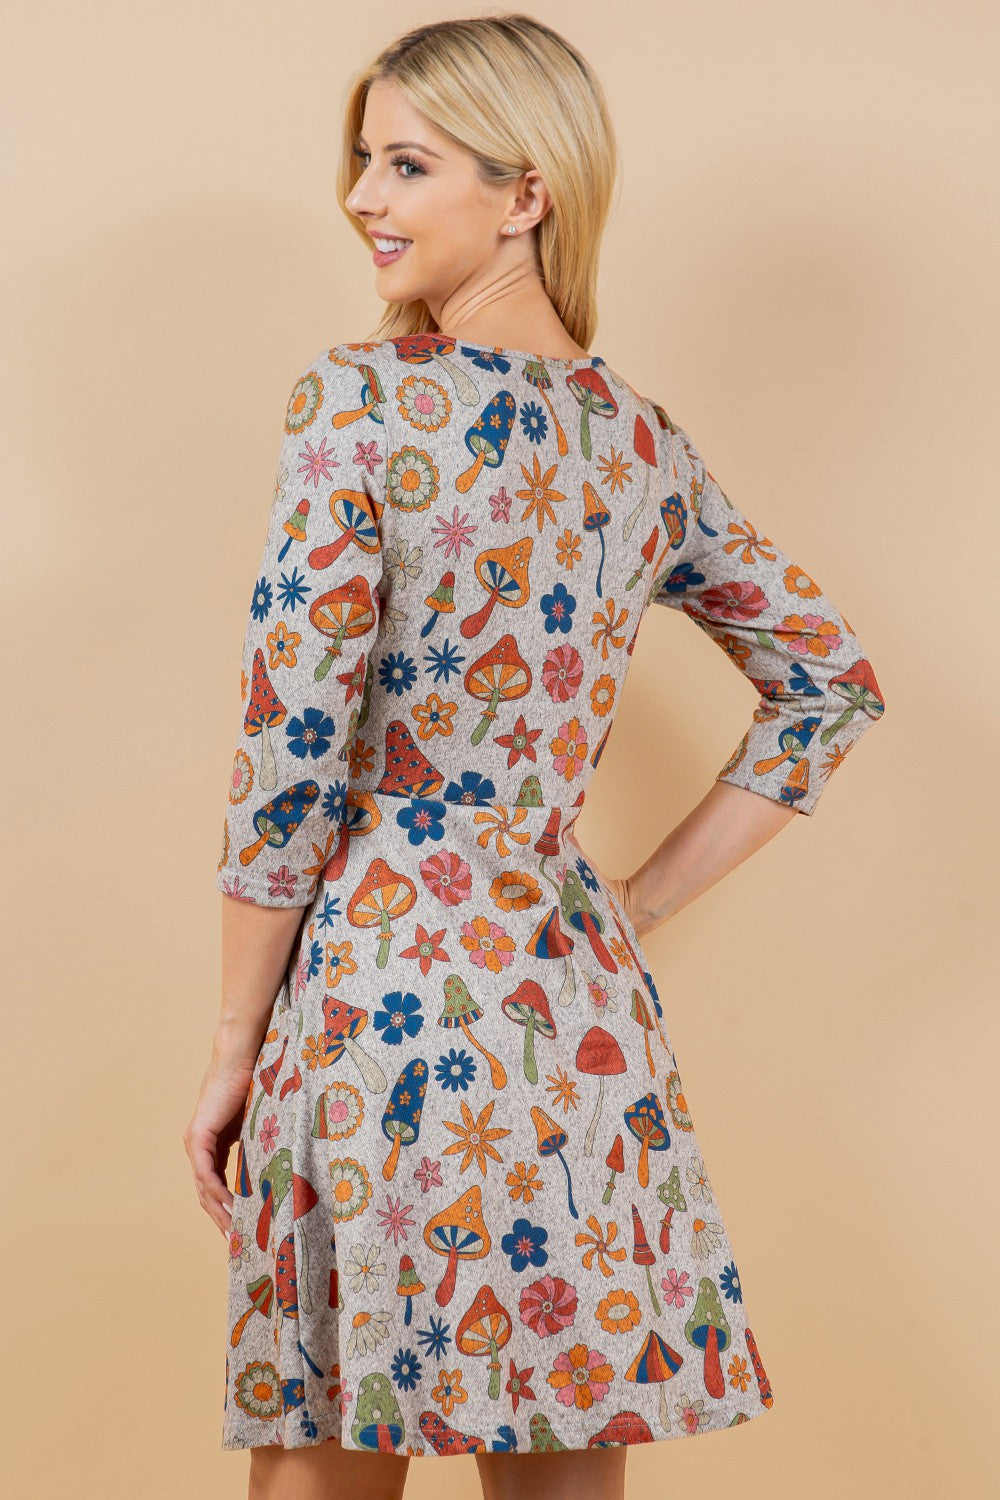 Retro Mushroom Print Dress